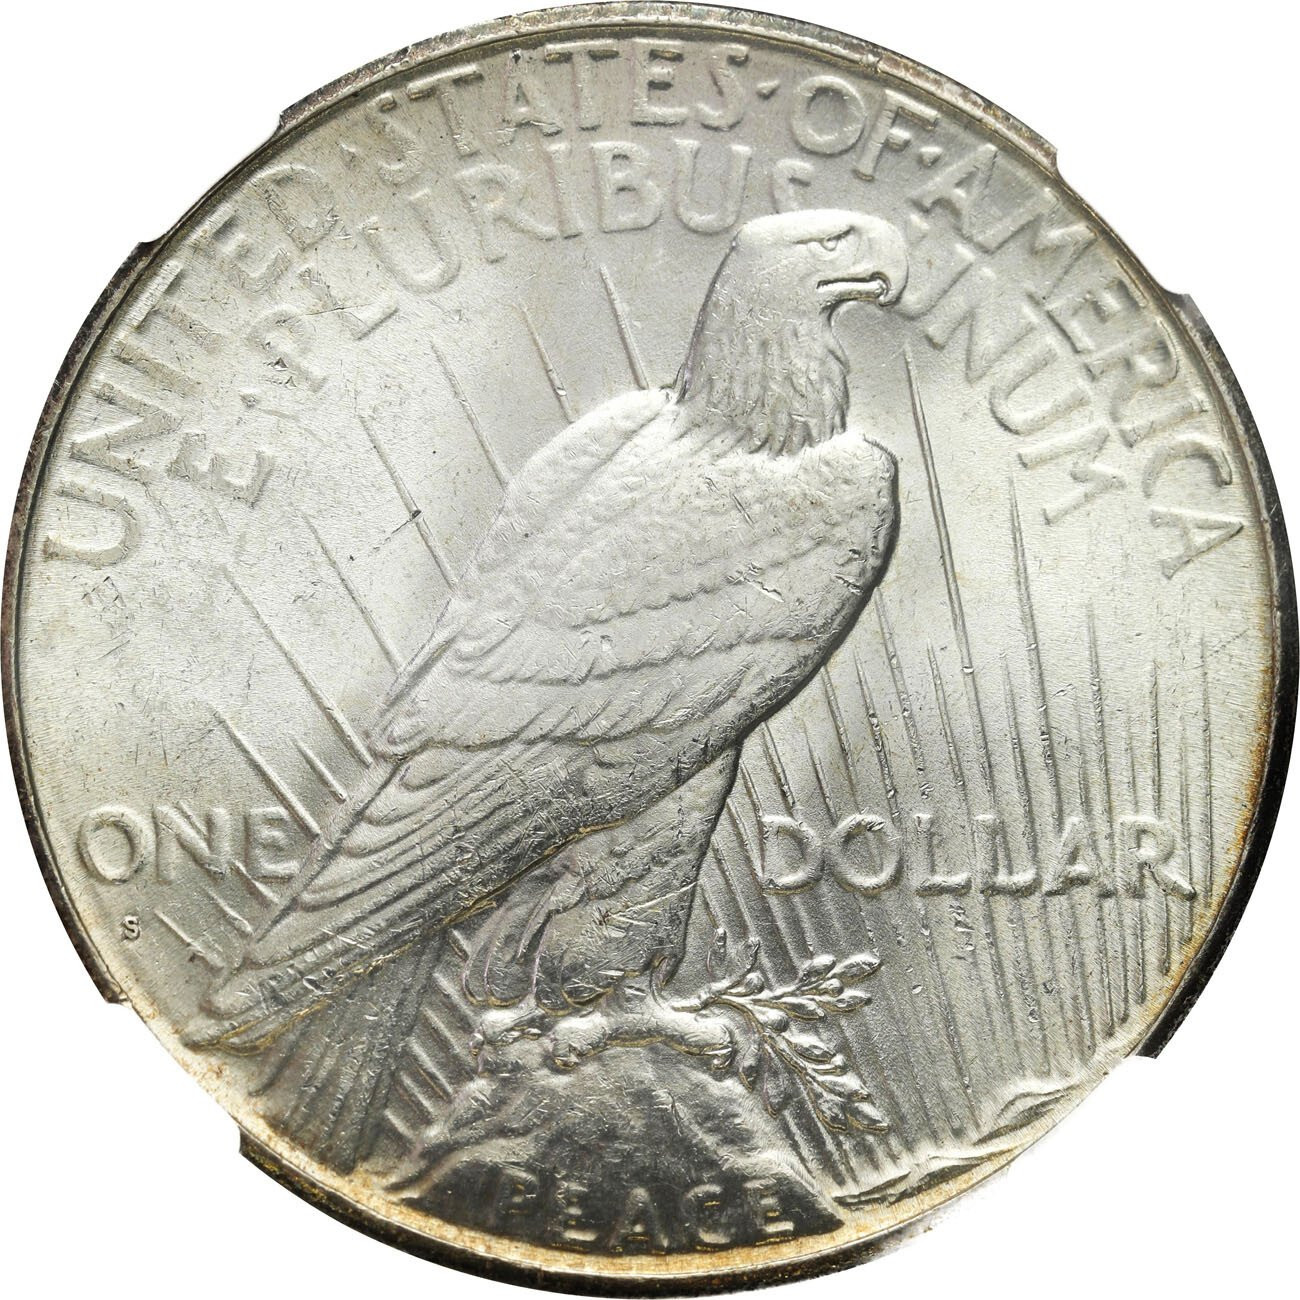 USA. 1 Dolar 1926 S, San Francisco NGC MS63 – PIĘKNY